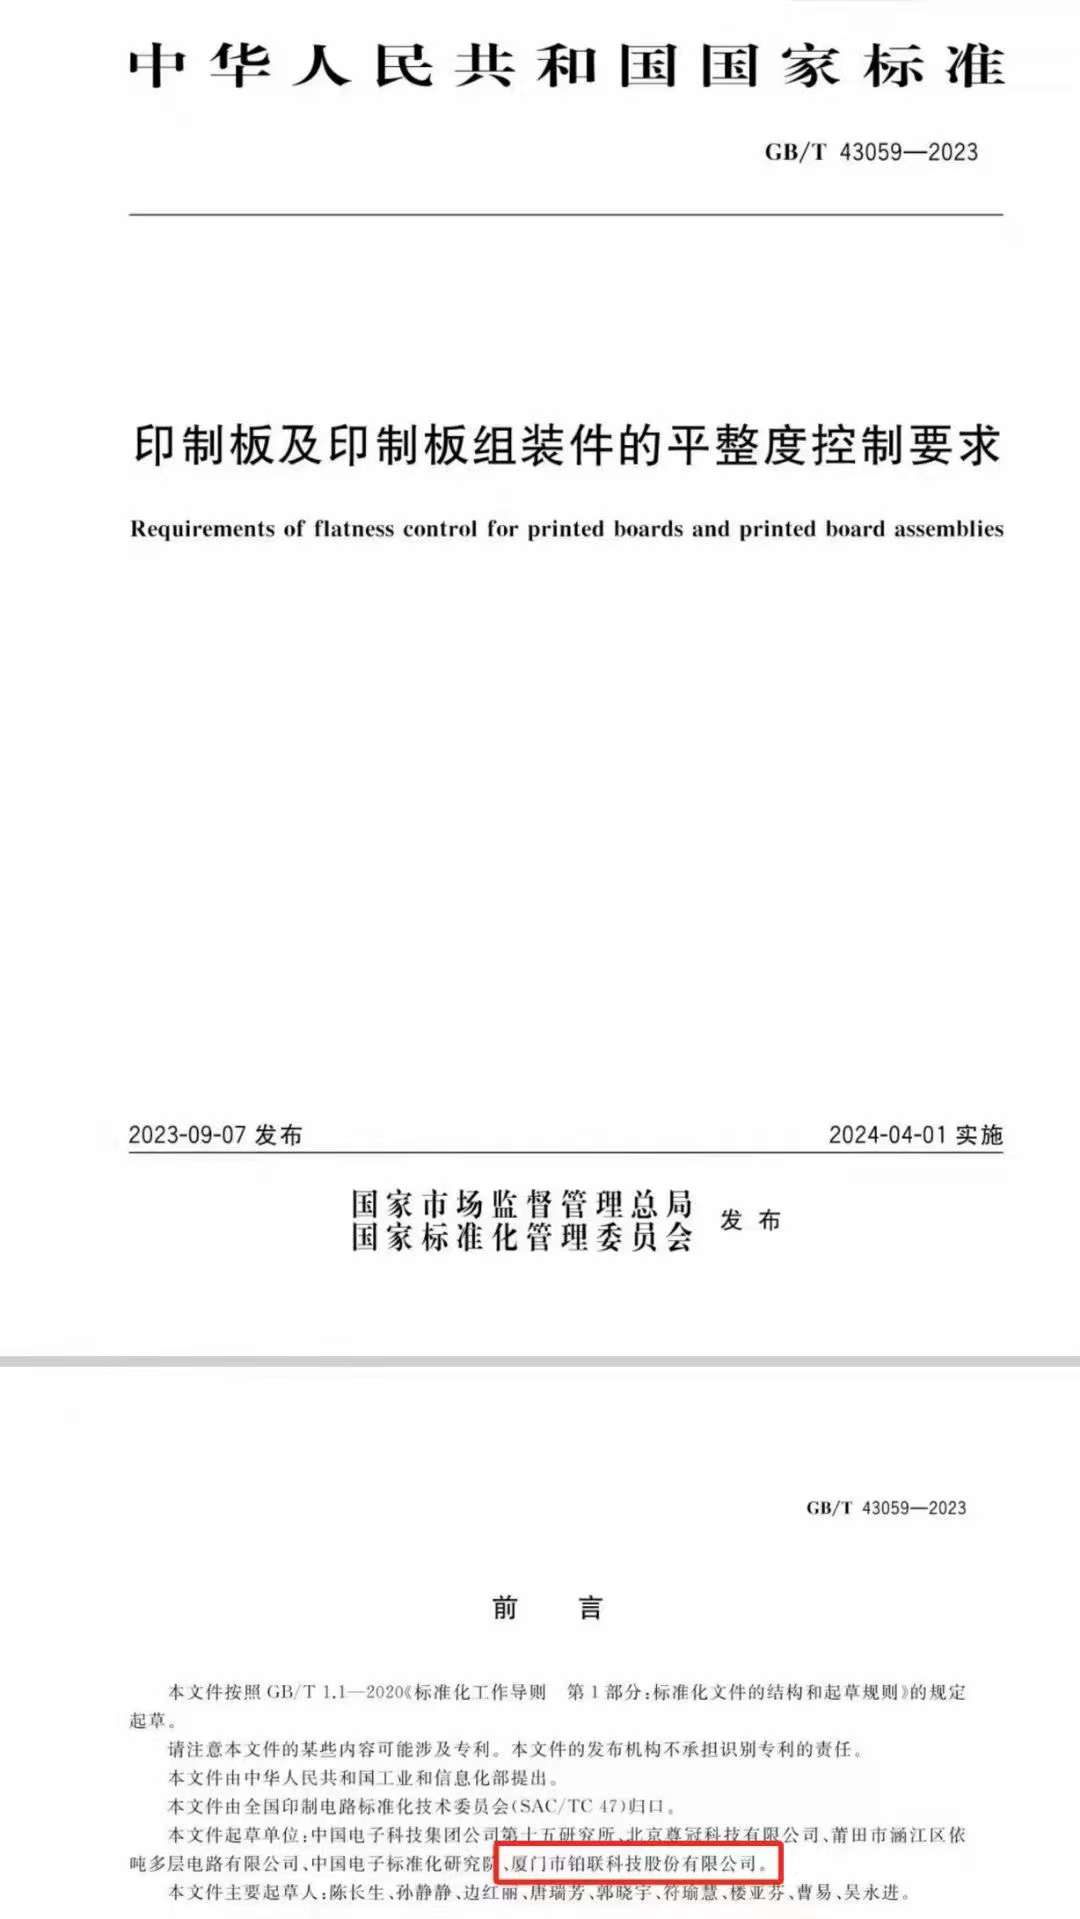 PCBA Flatness ထိန်းချုပ်မှုအကြောင်း PRC အမျိုးသားစံ GBT 43059—2023